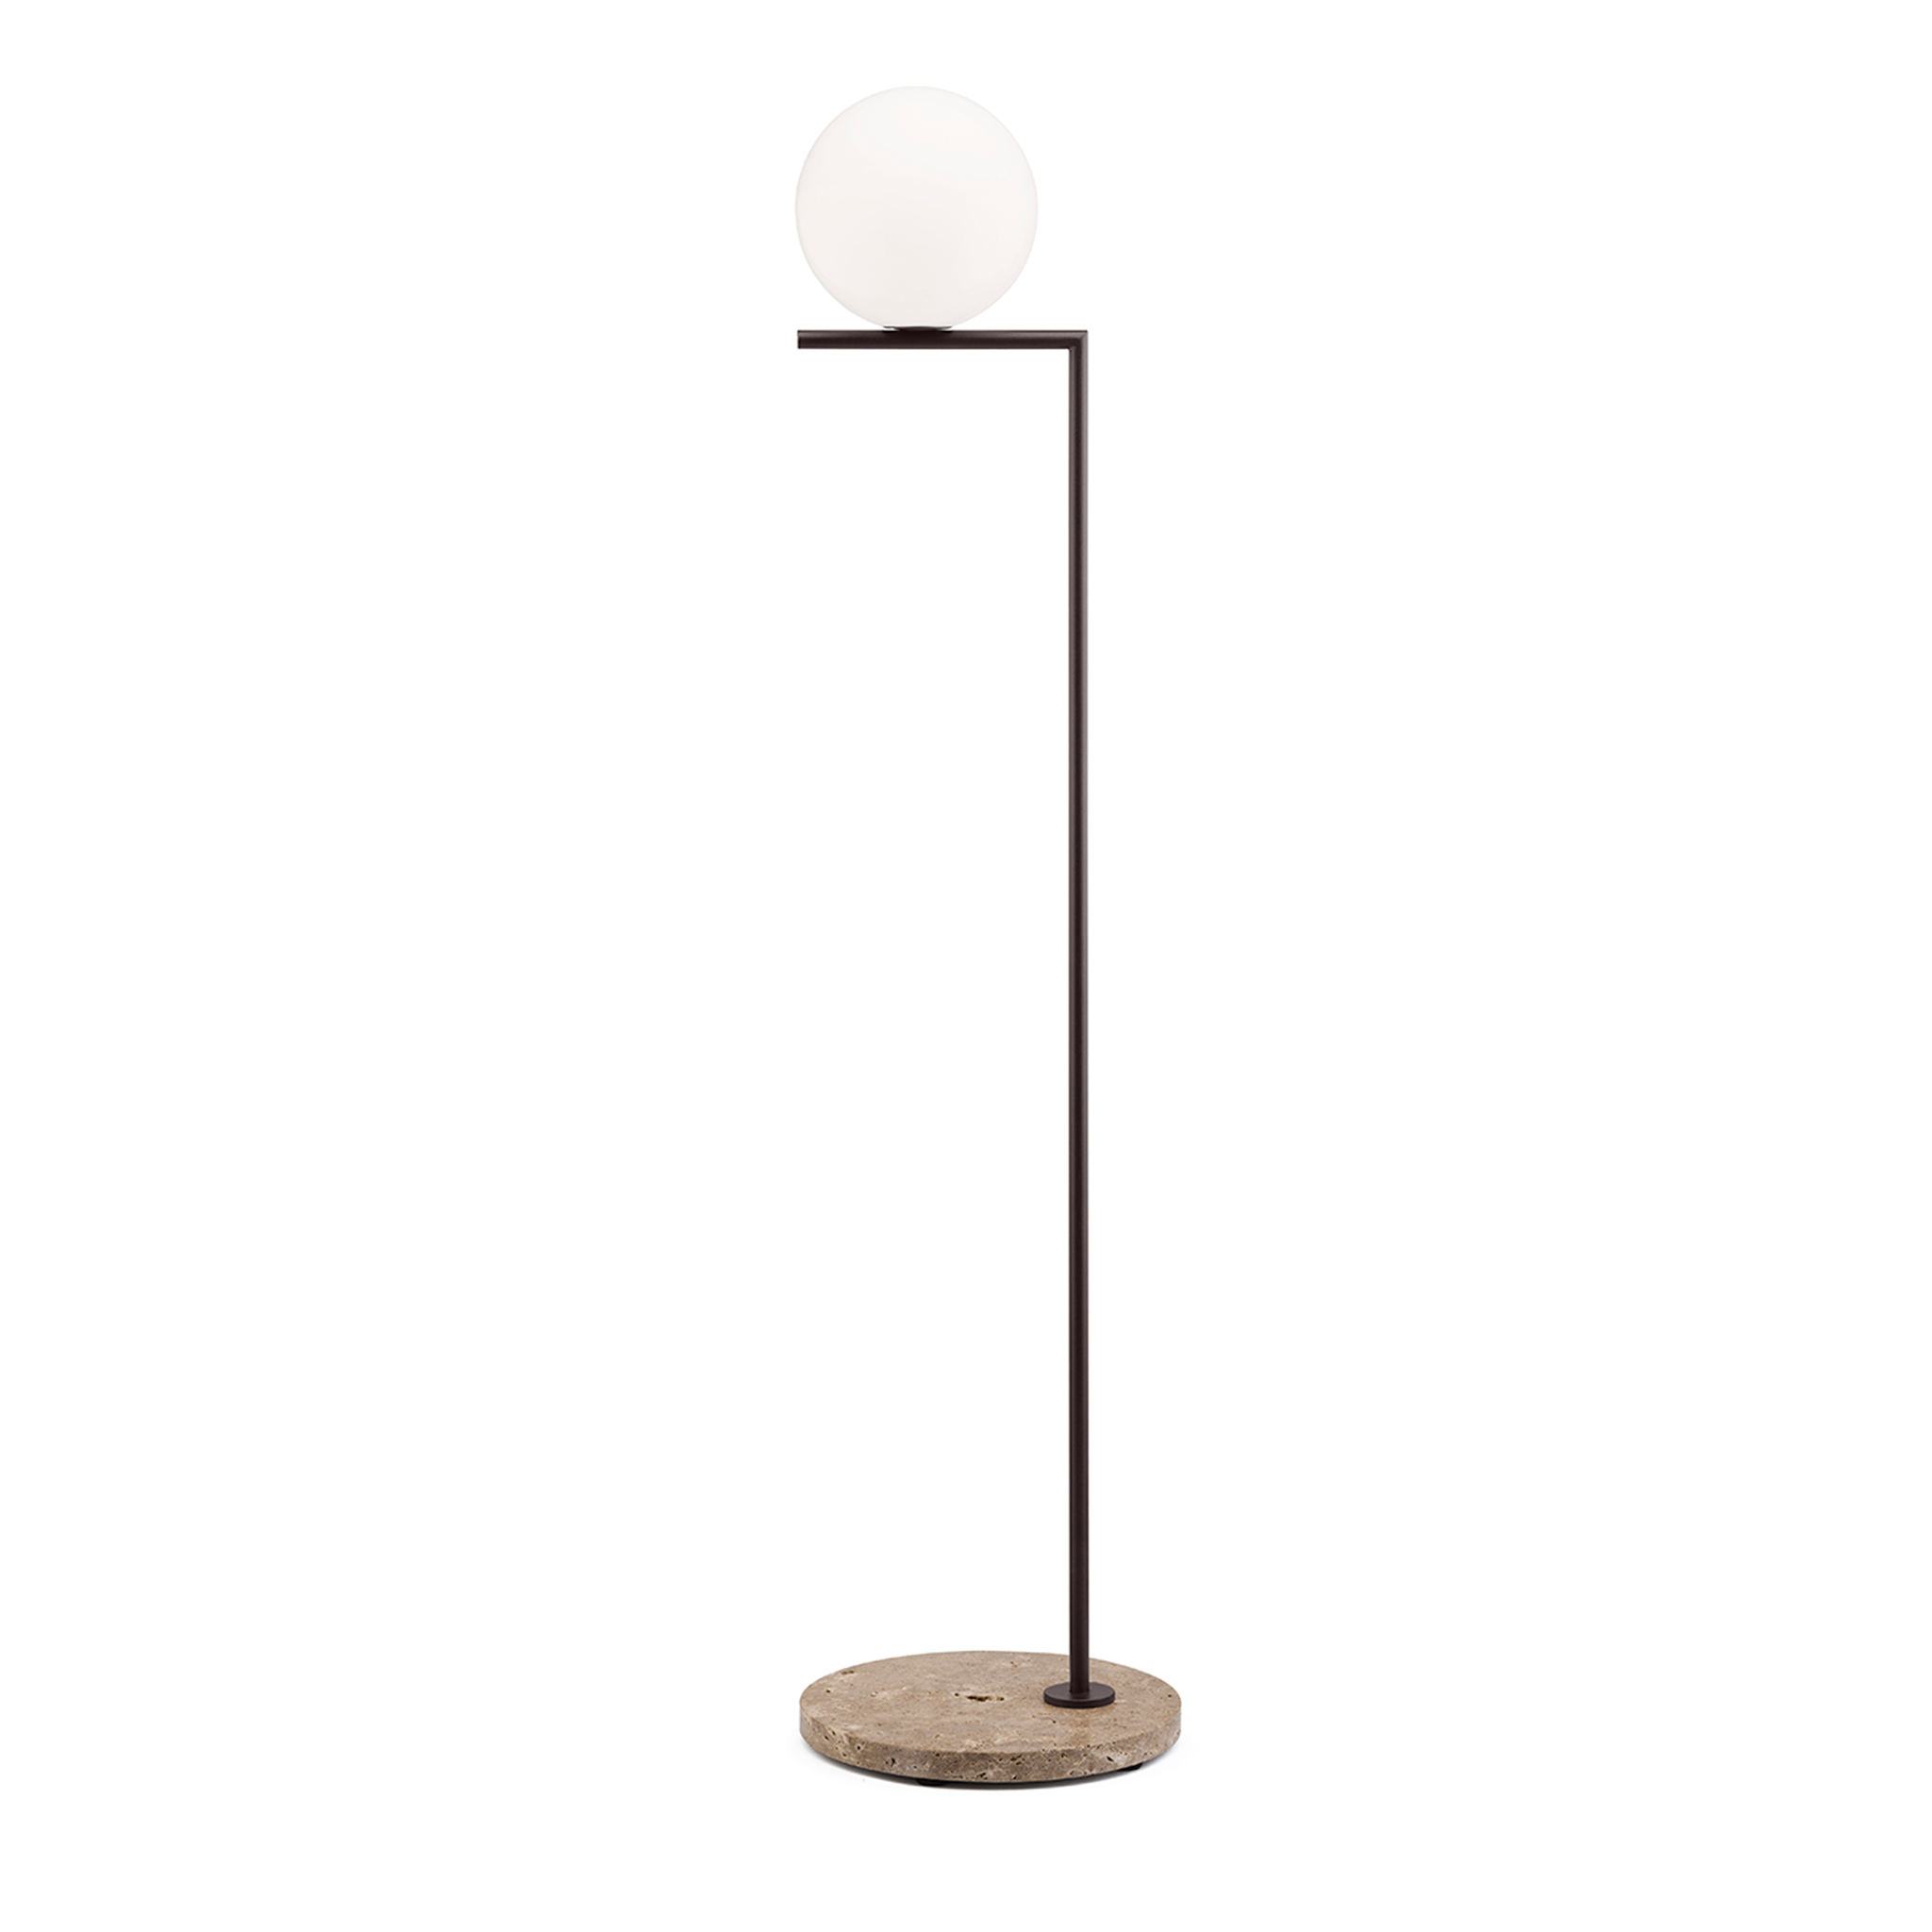 IC Floor Lamp Outdoor by Michael Anastassiades for Flos